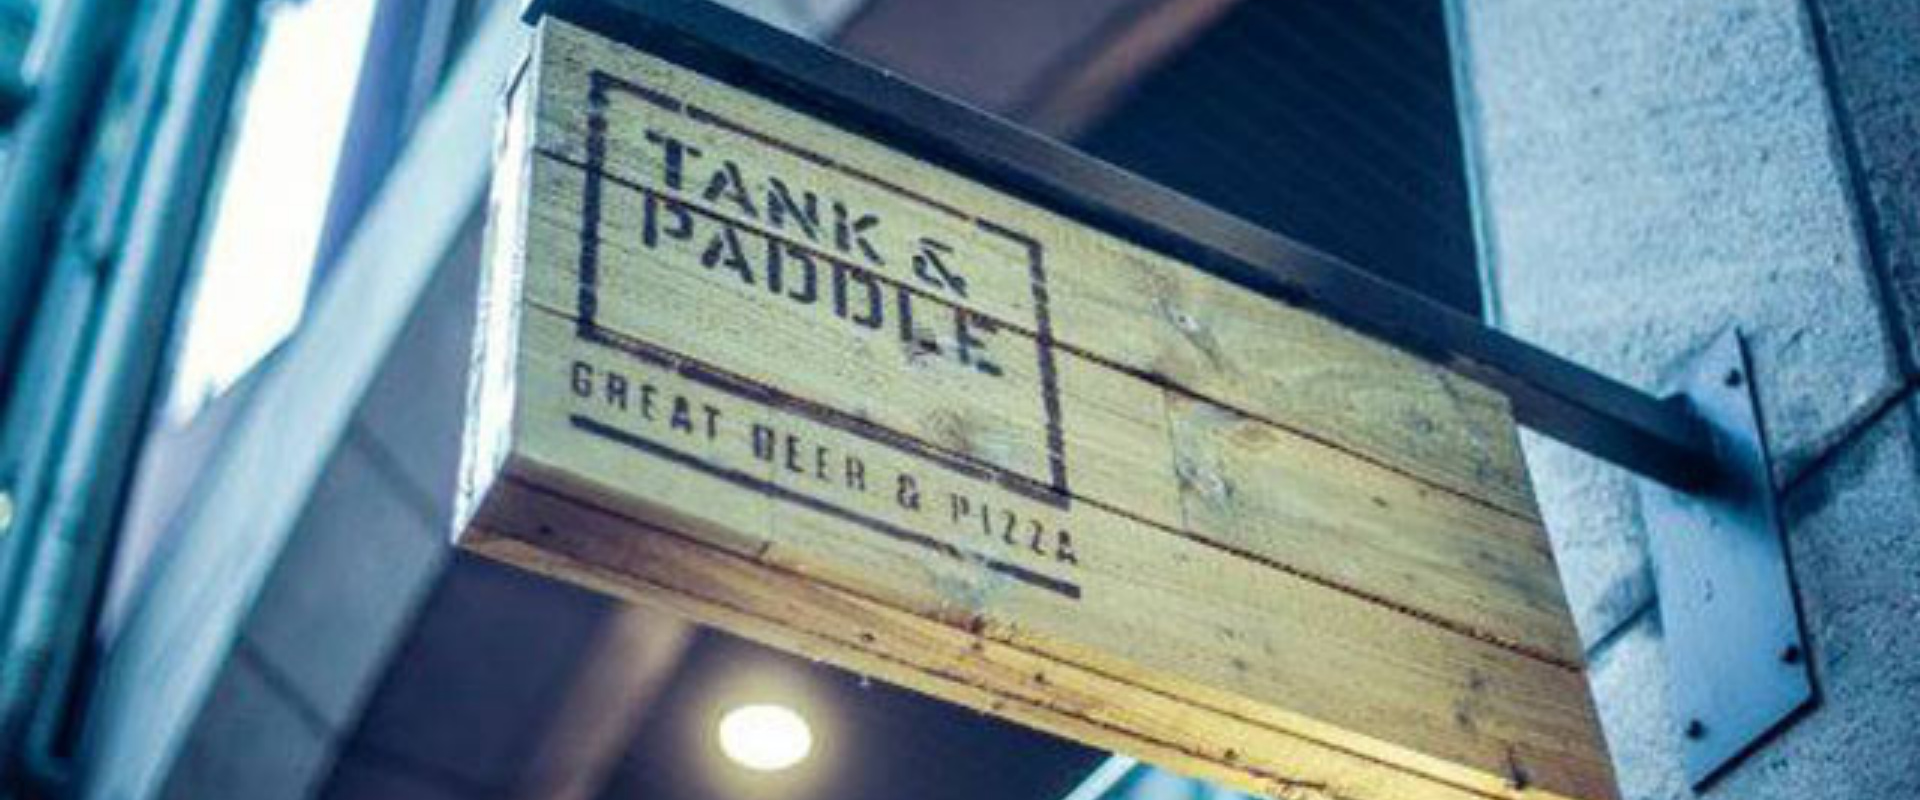 Tank & Paddle Sign